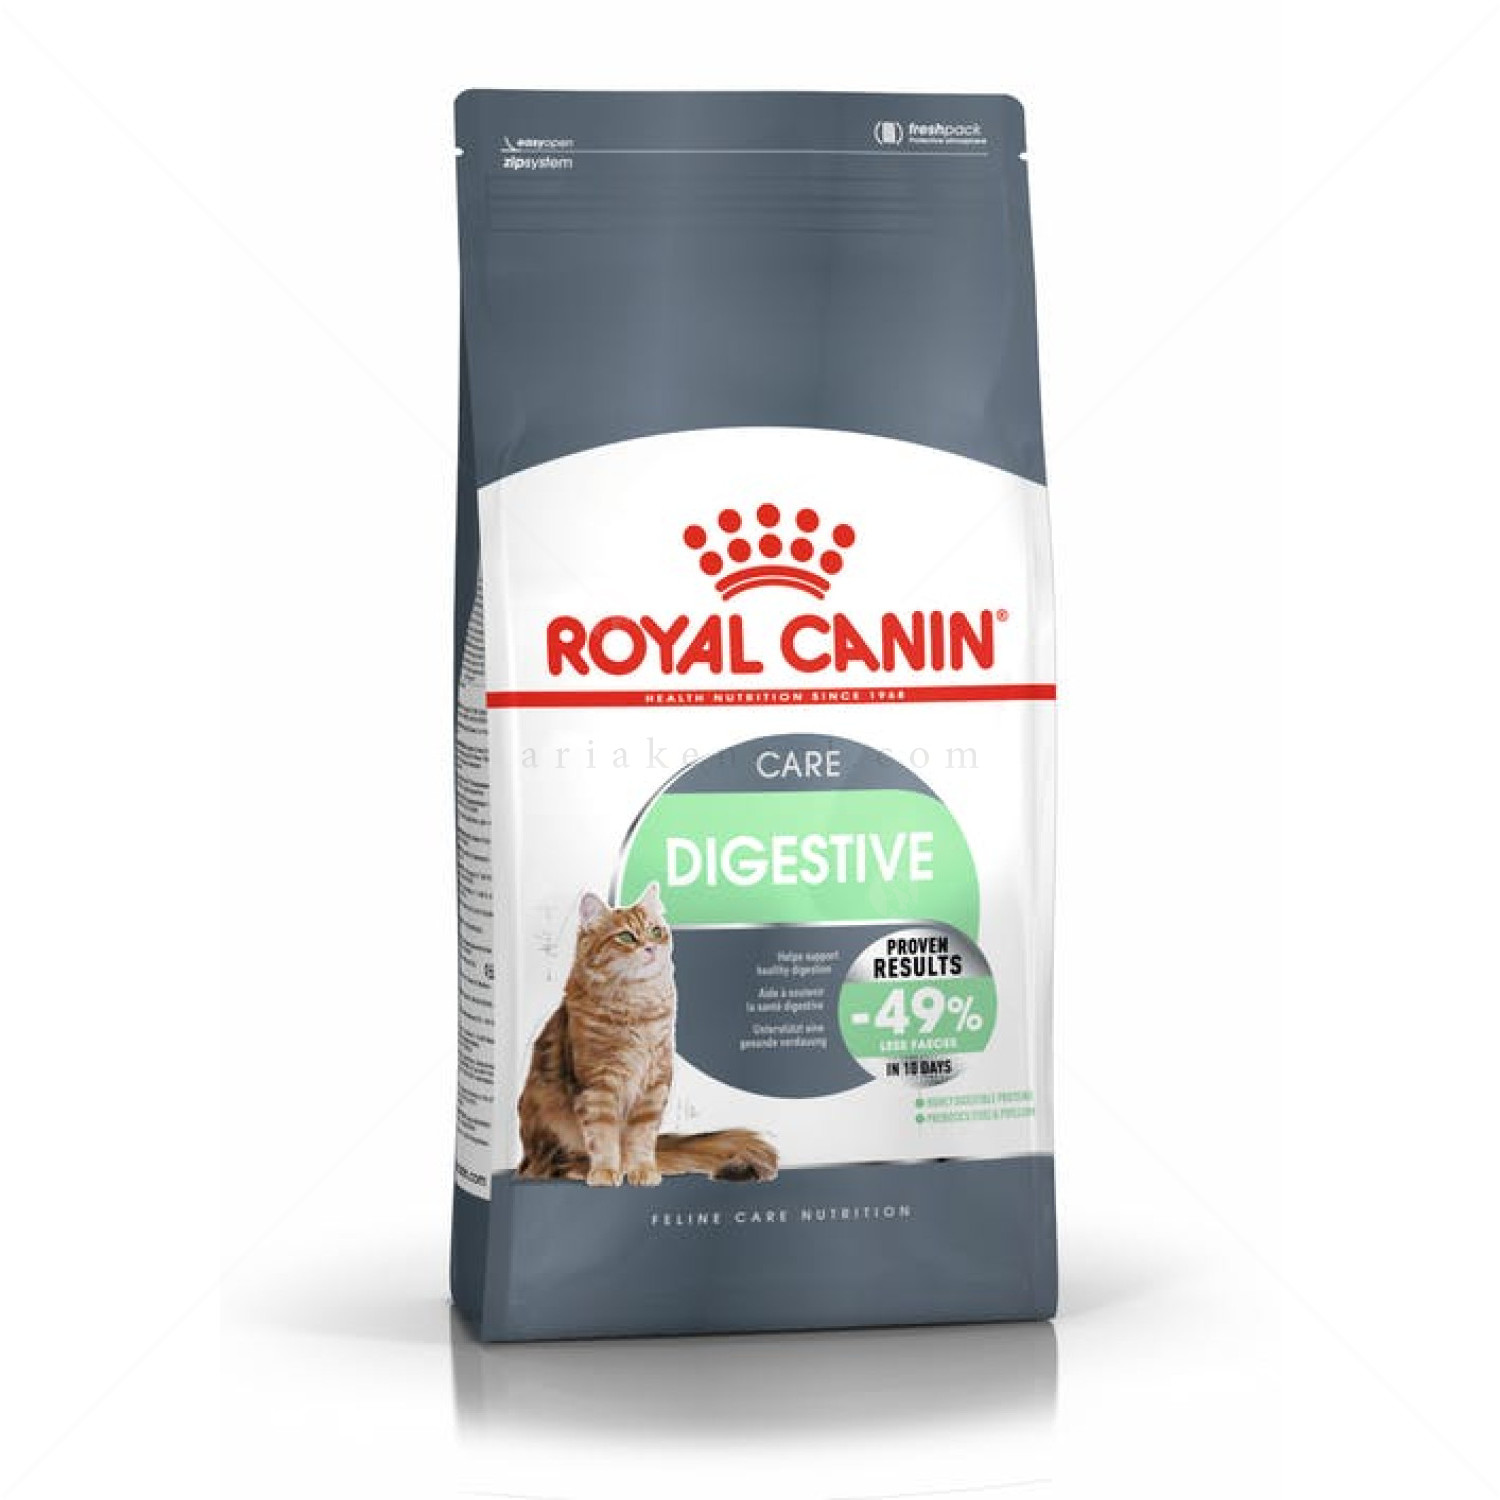 ROYAL CANIN 10 кг. Care Digestive